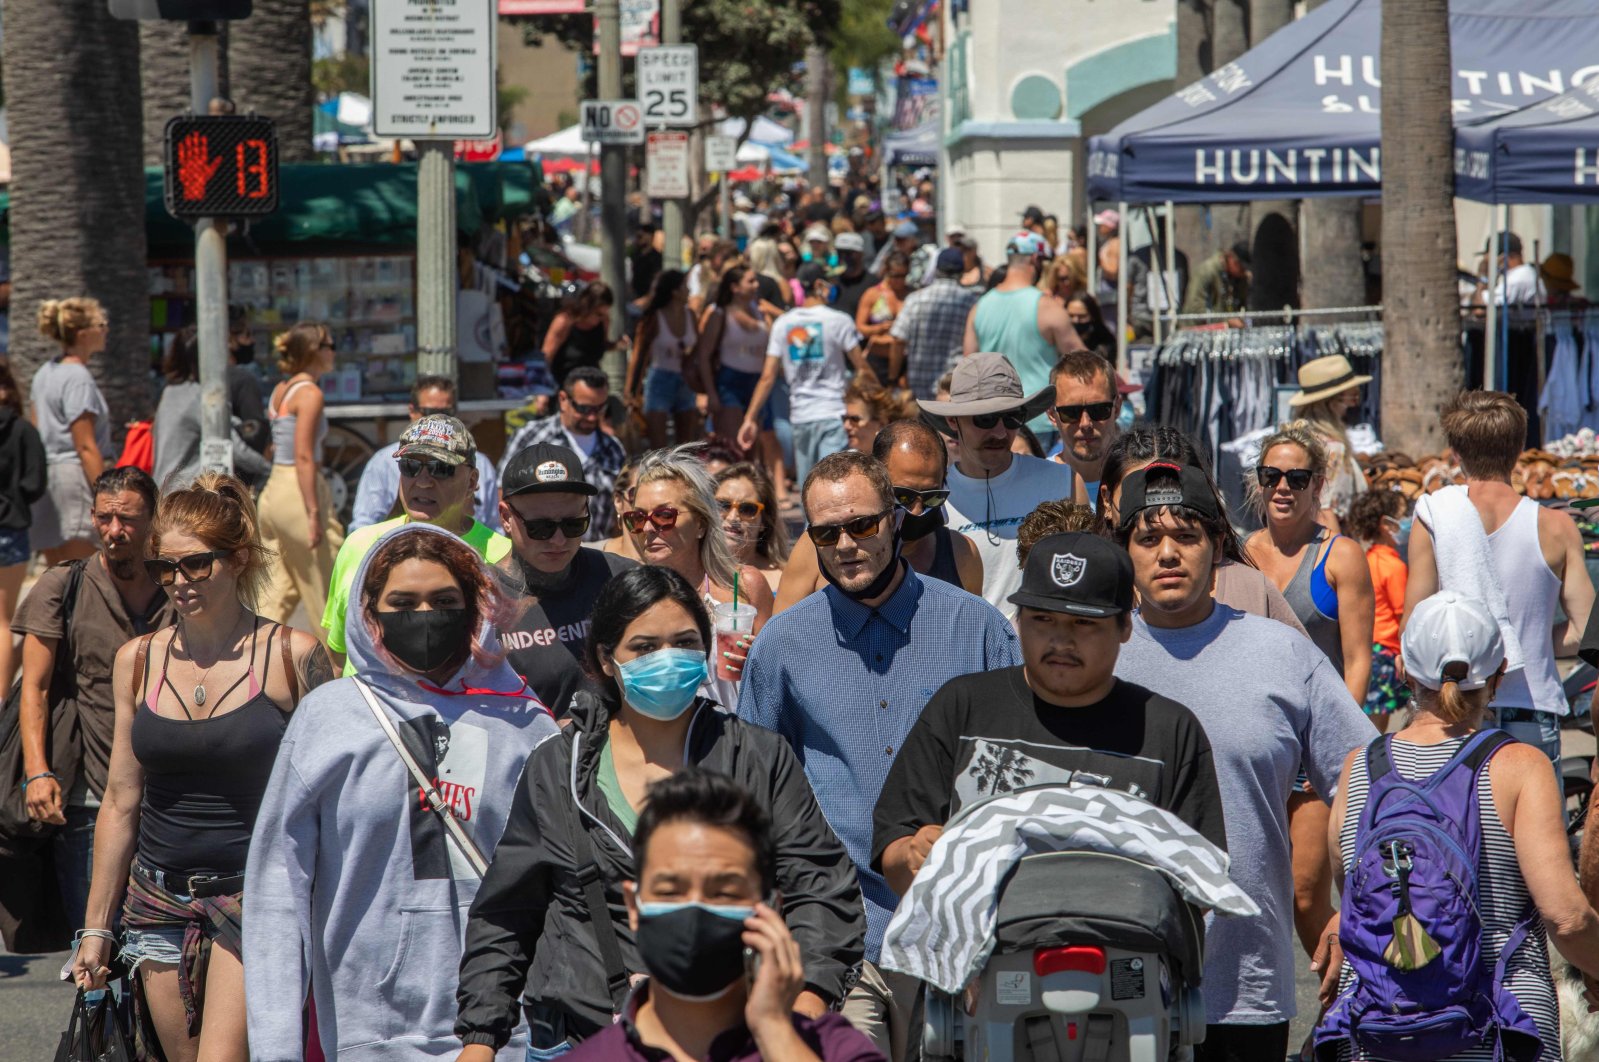 People cross the street in Huntington Beach, California, amid the coronavirus pandemic, July 19, 2020. (AFP Photo)